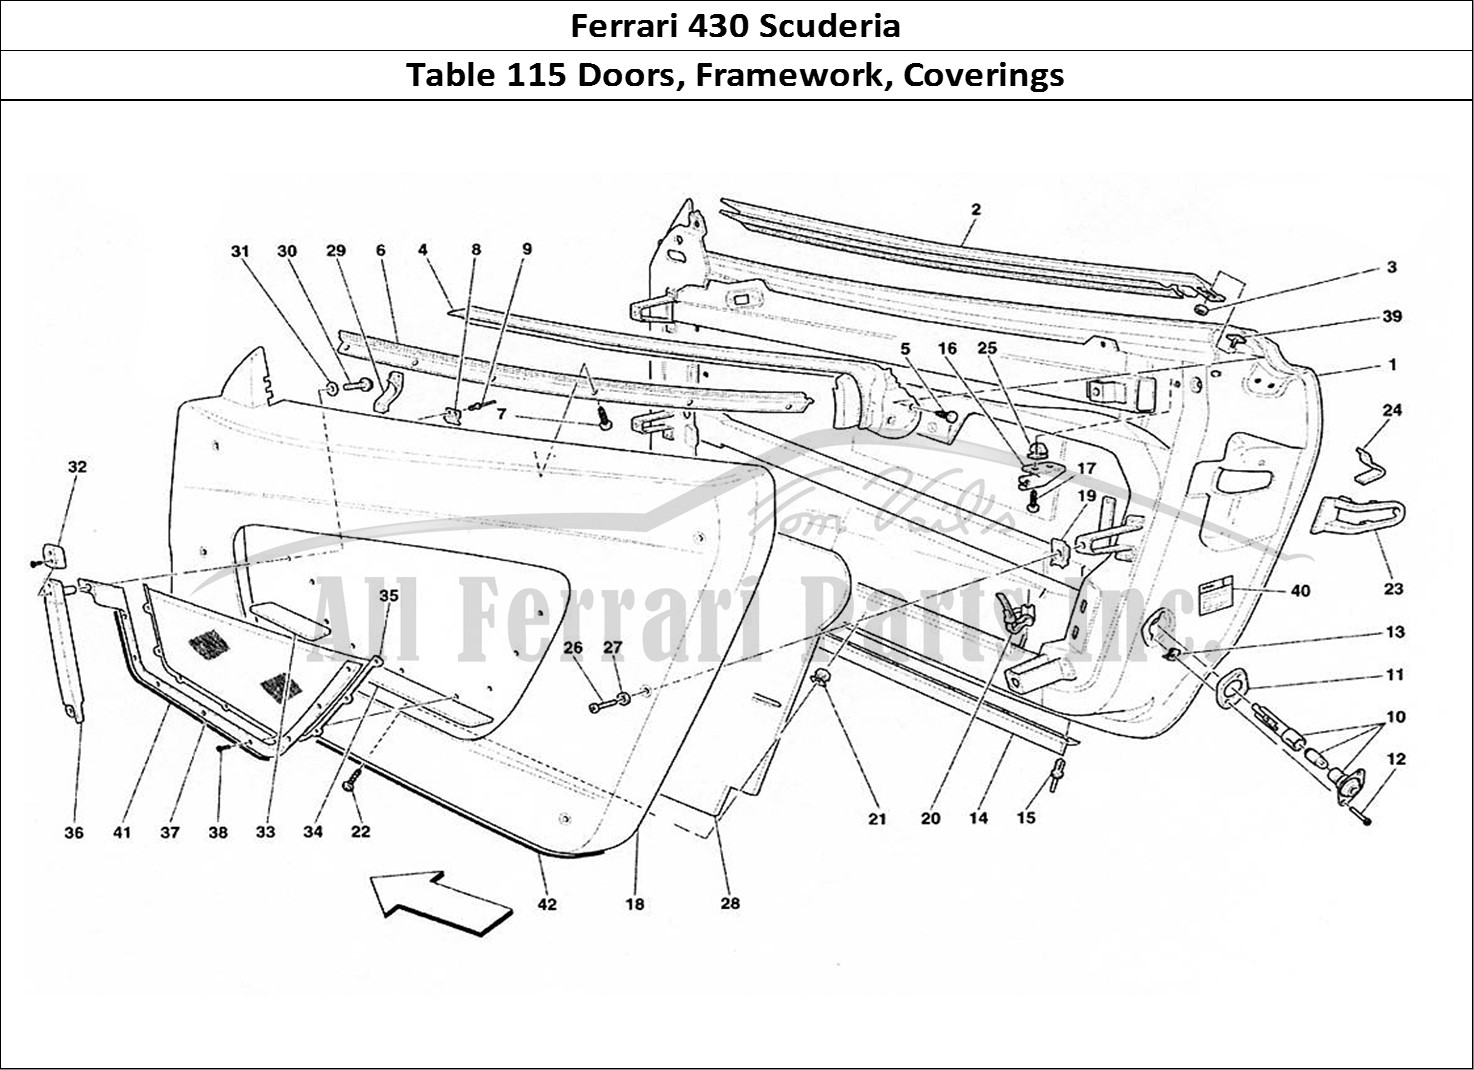 Ferrari Parts Ferrari 430 Scuderia Page 115 Doors - Framework and Cov